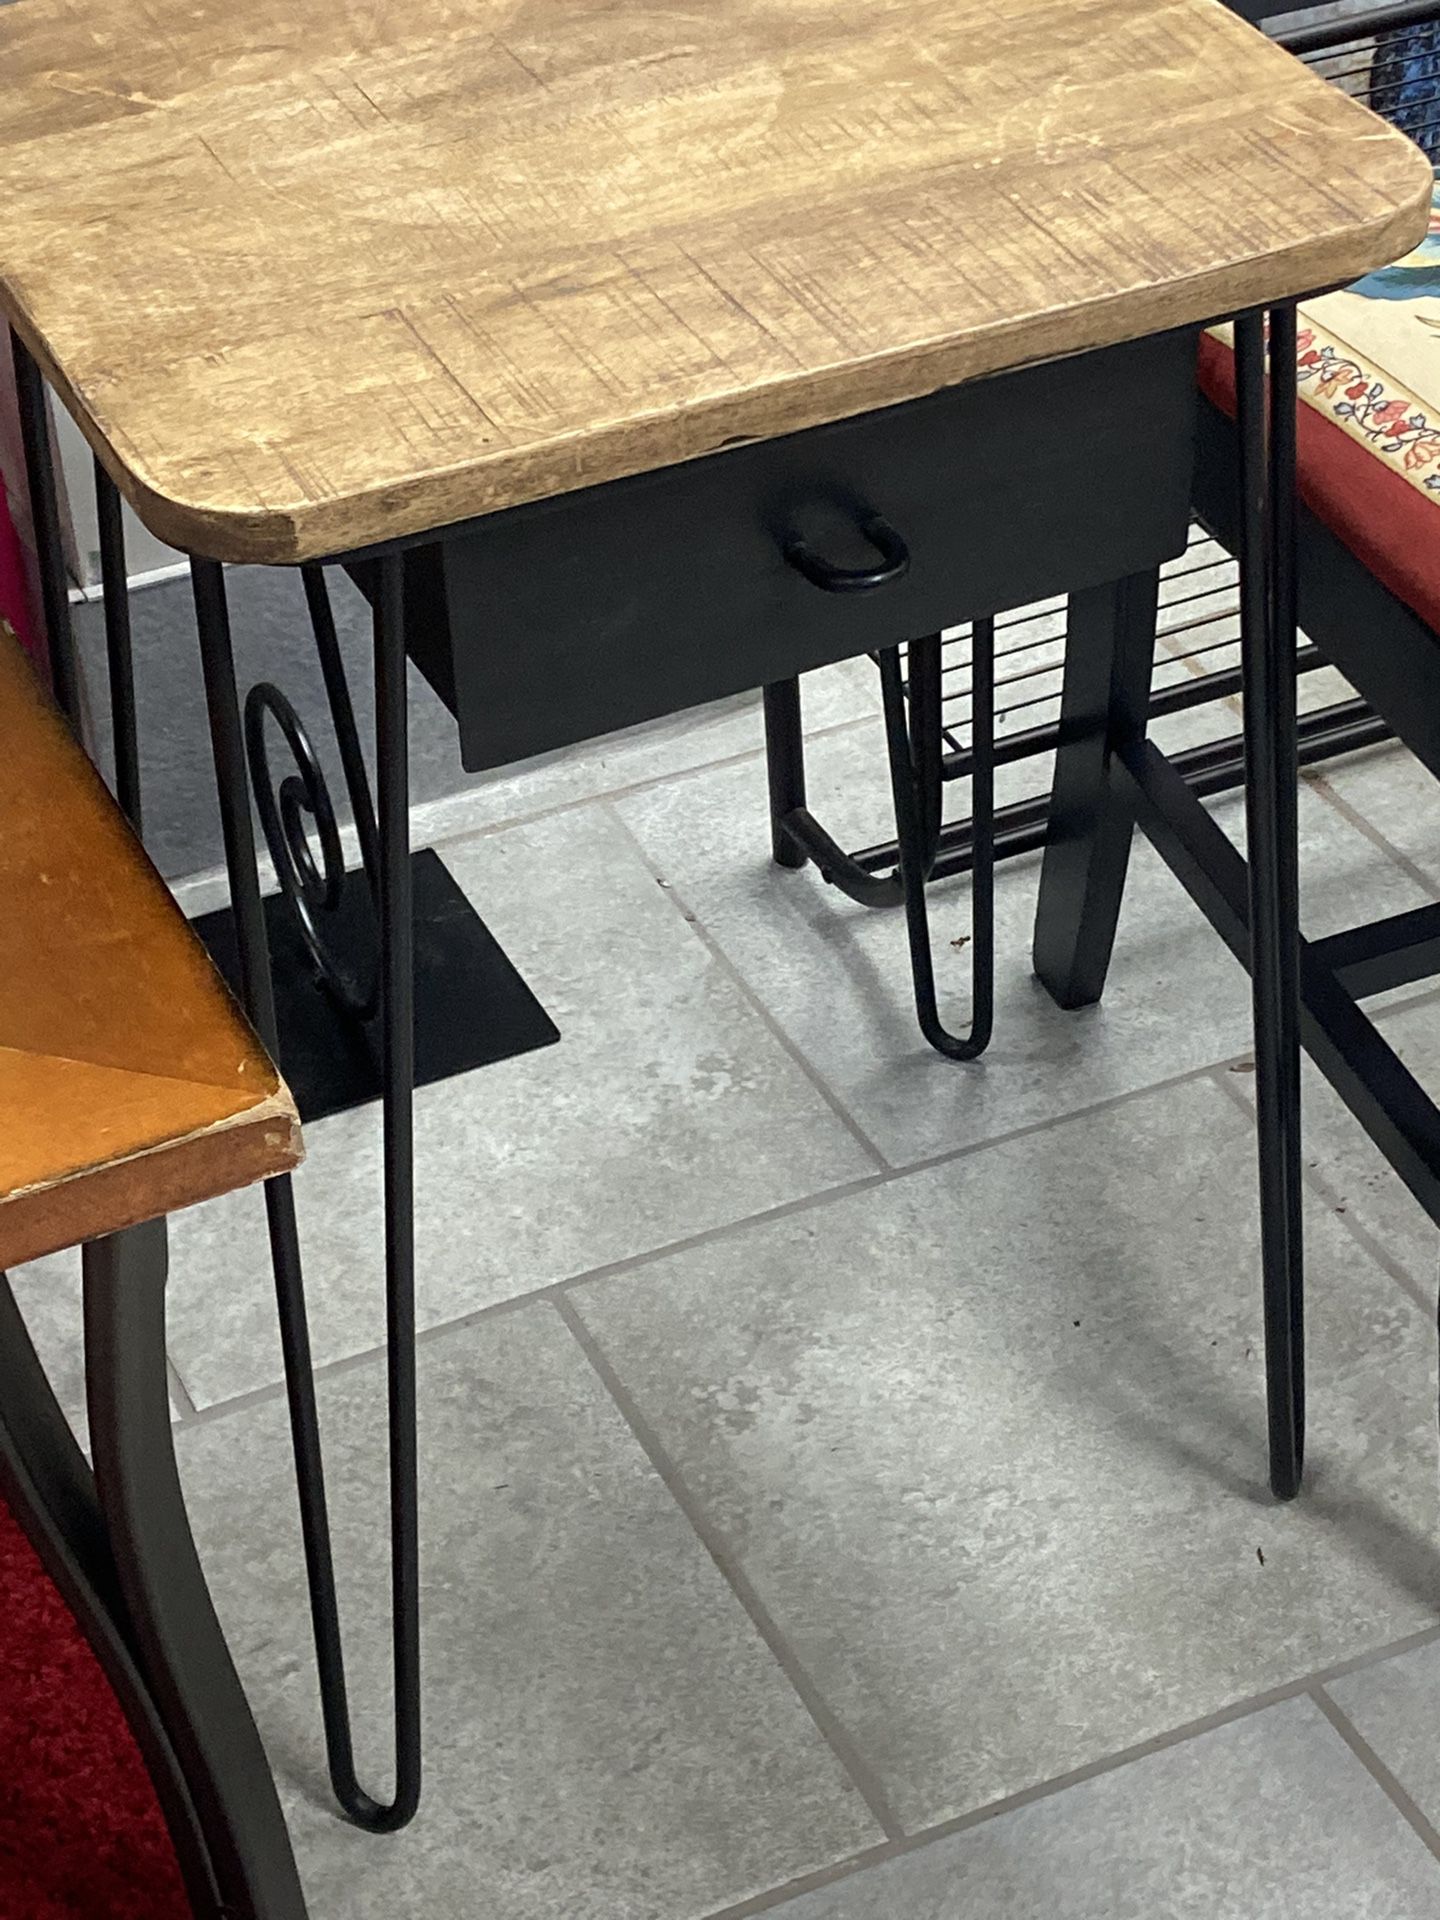 Small Tables & Stands - Location In Description 